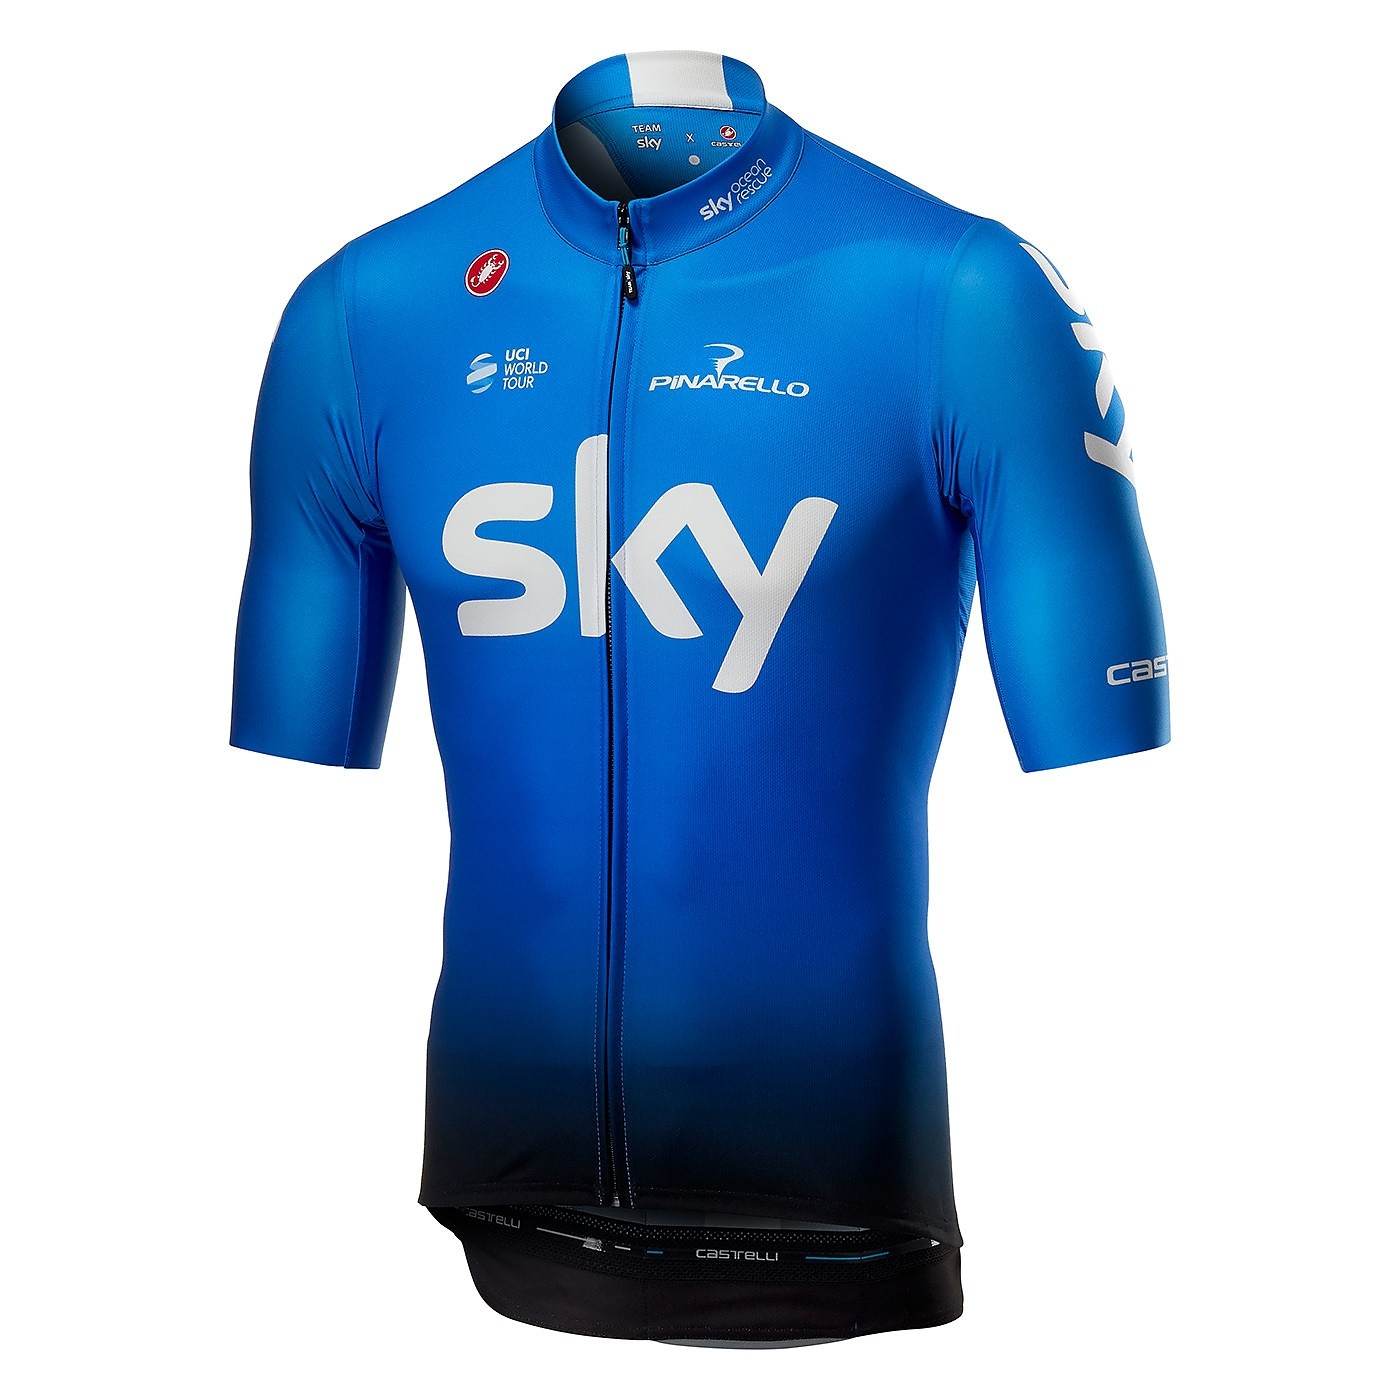 Castelli Team Sky squadra maillot de cyclisme manches courtes ocean rescue bleu noir